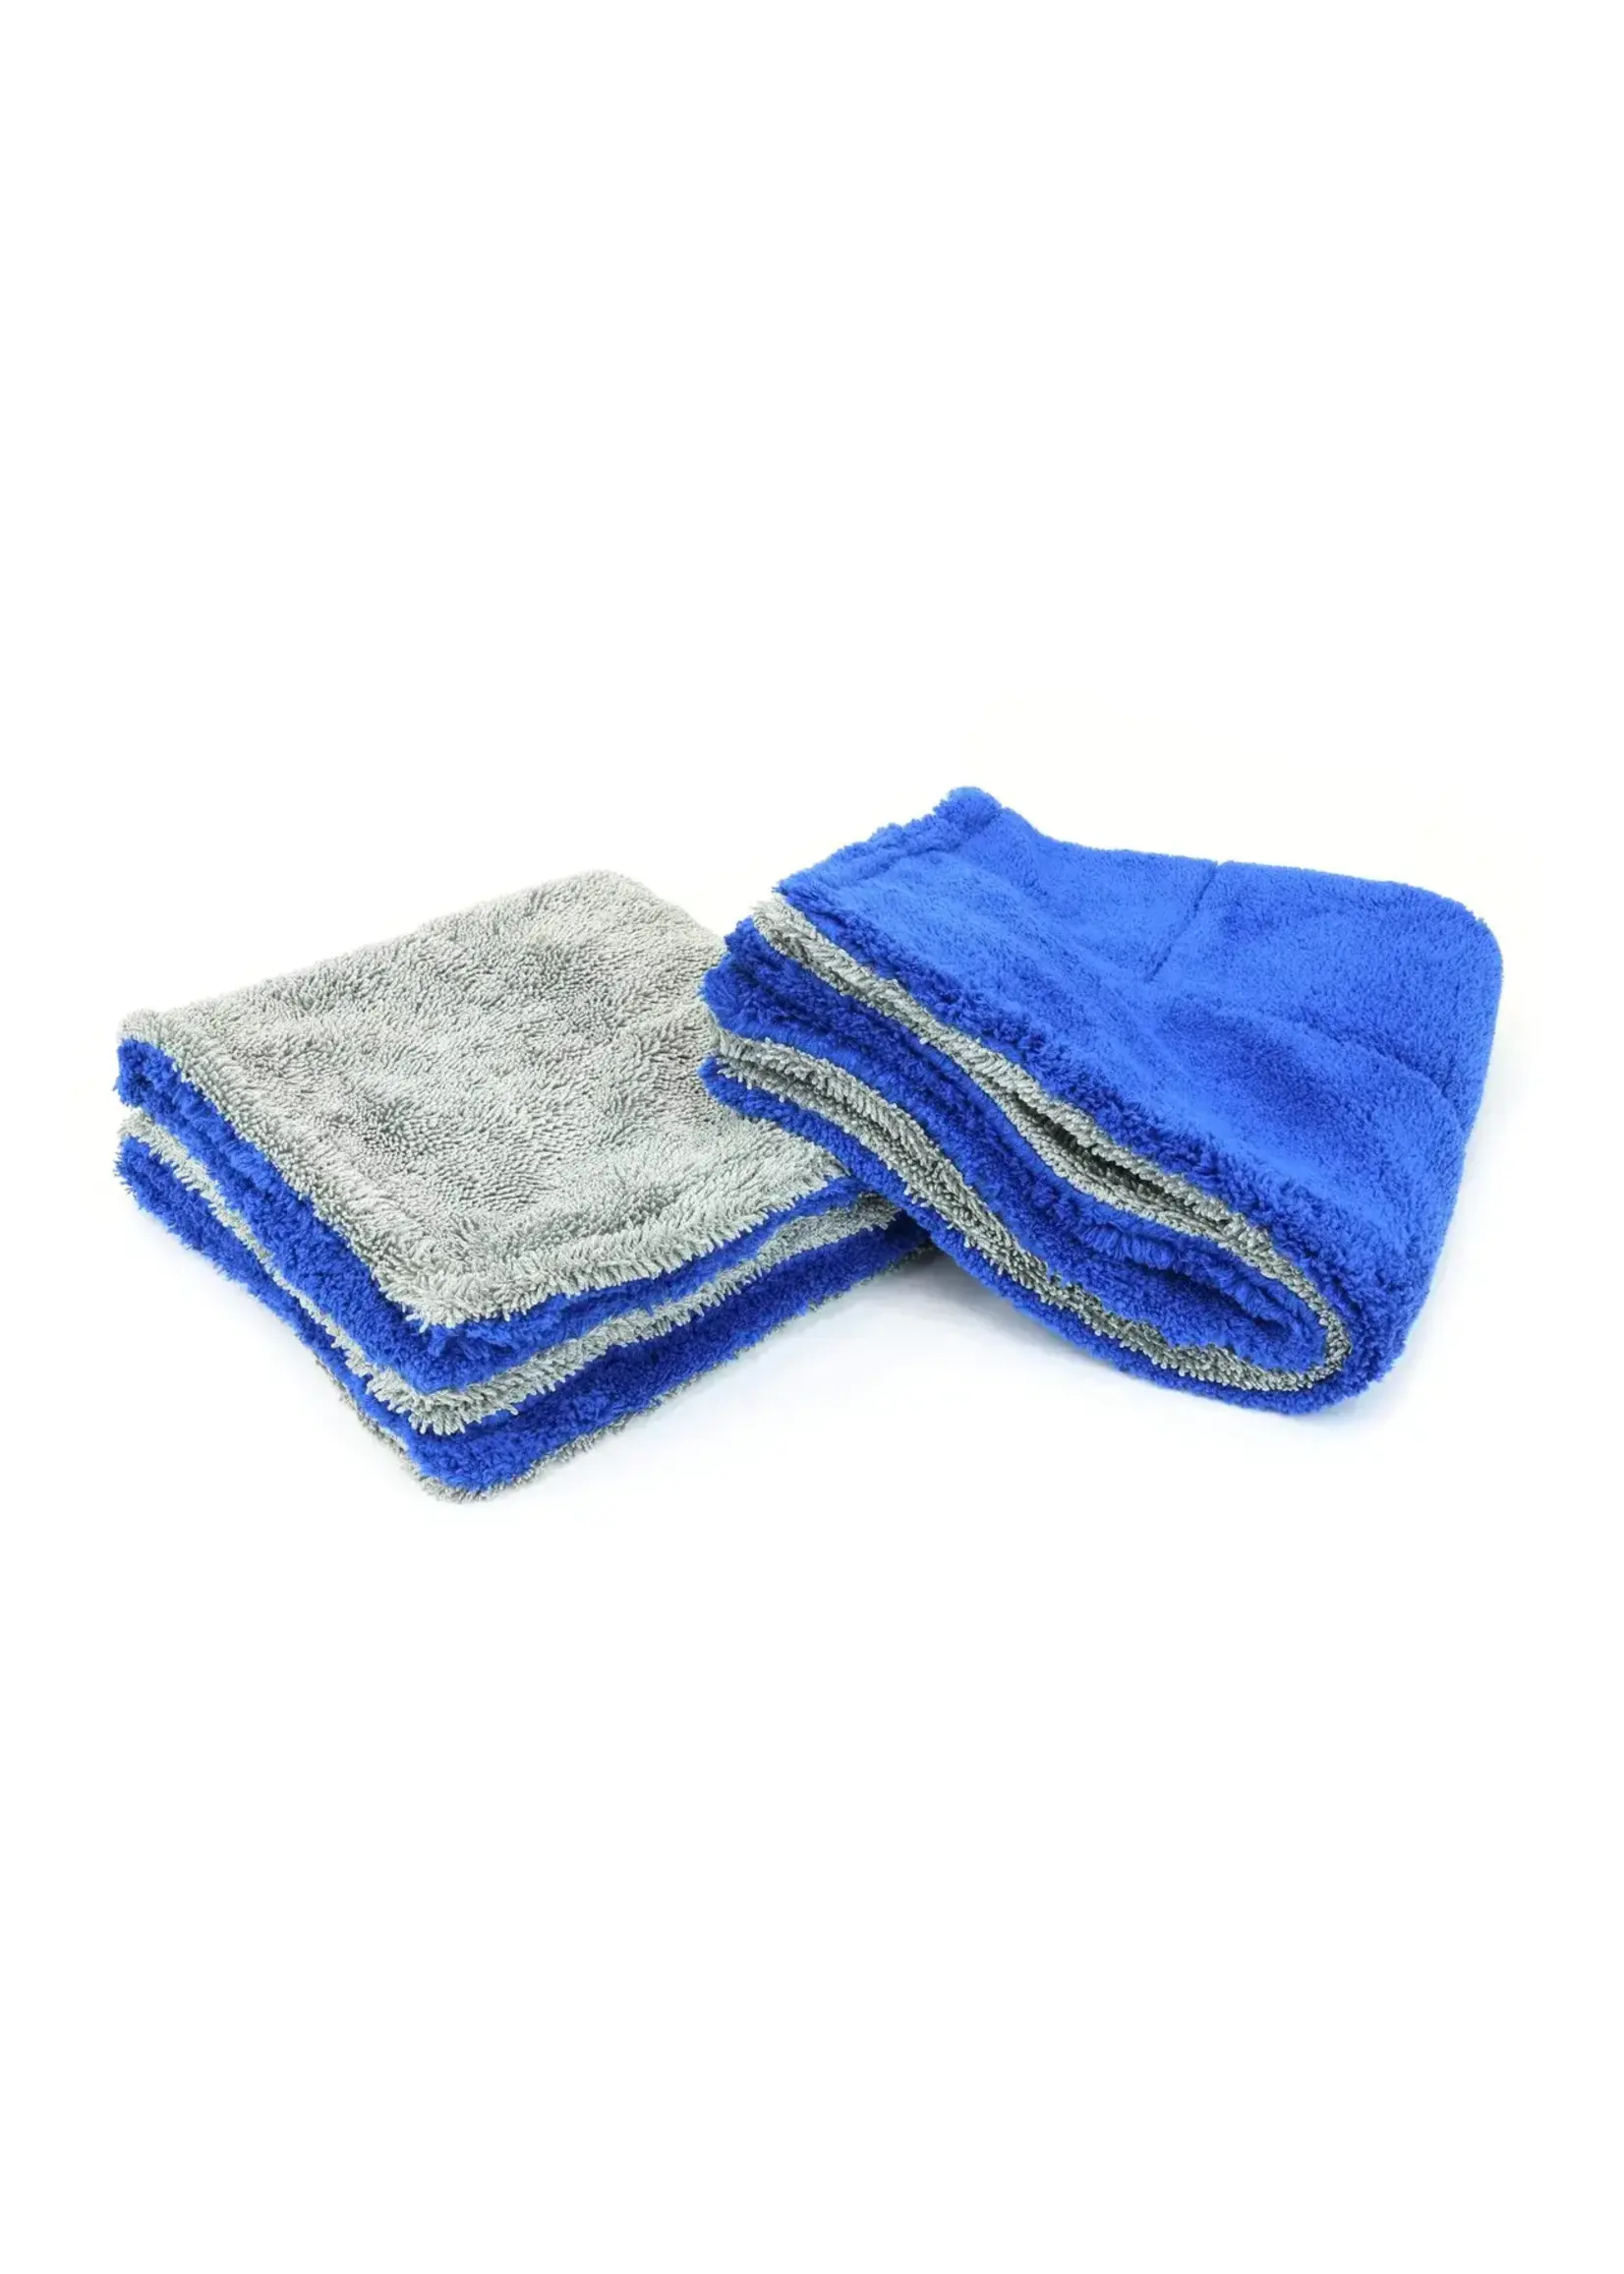 Autofiber Amphibian Jr. Drying Towel